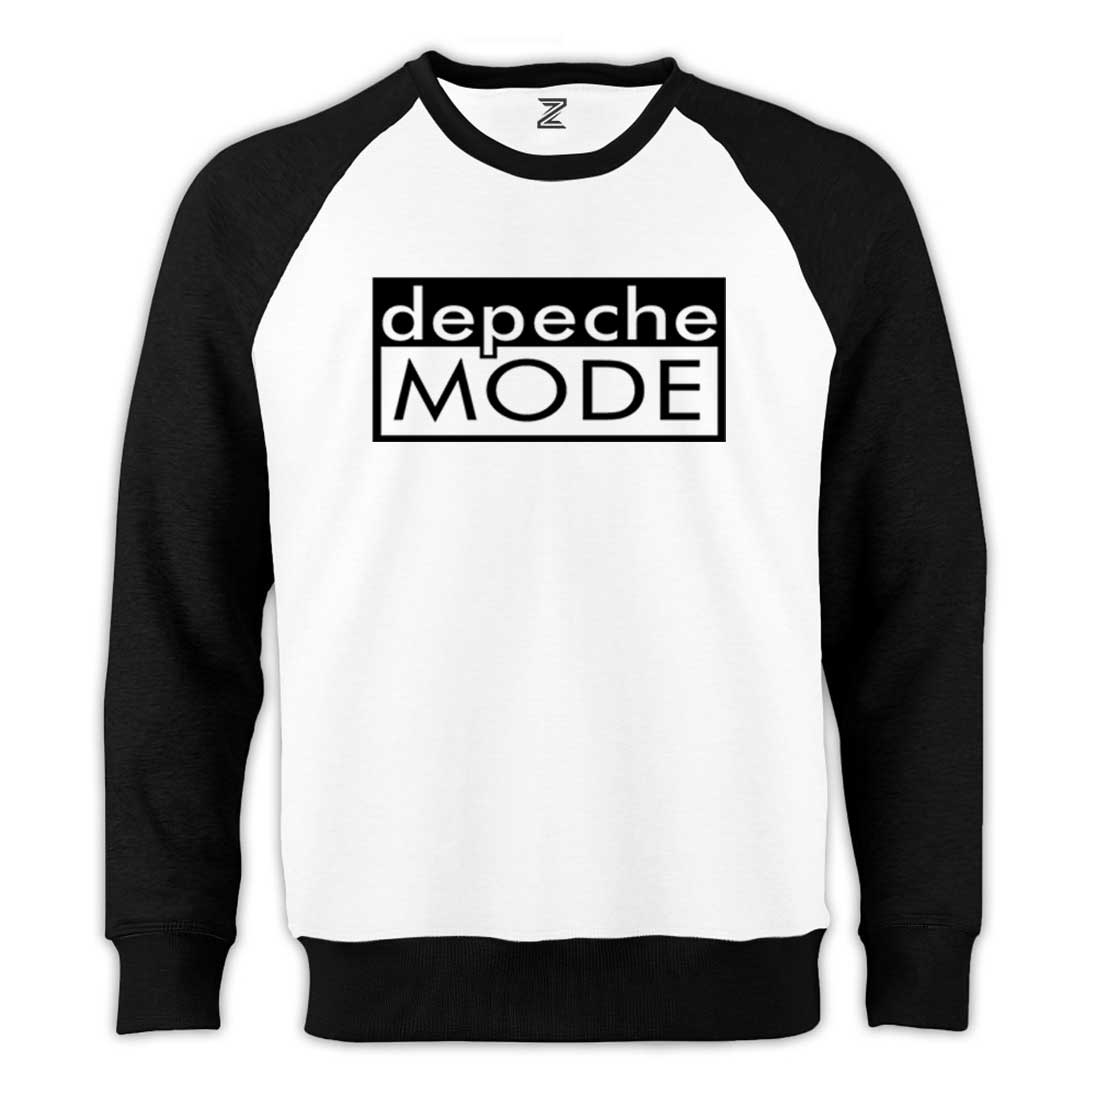 Depeche Mode Text Reglan Kol Beyaz Sweatshirt